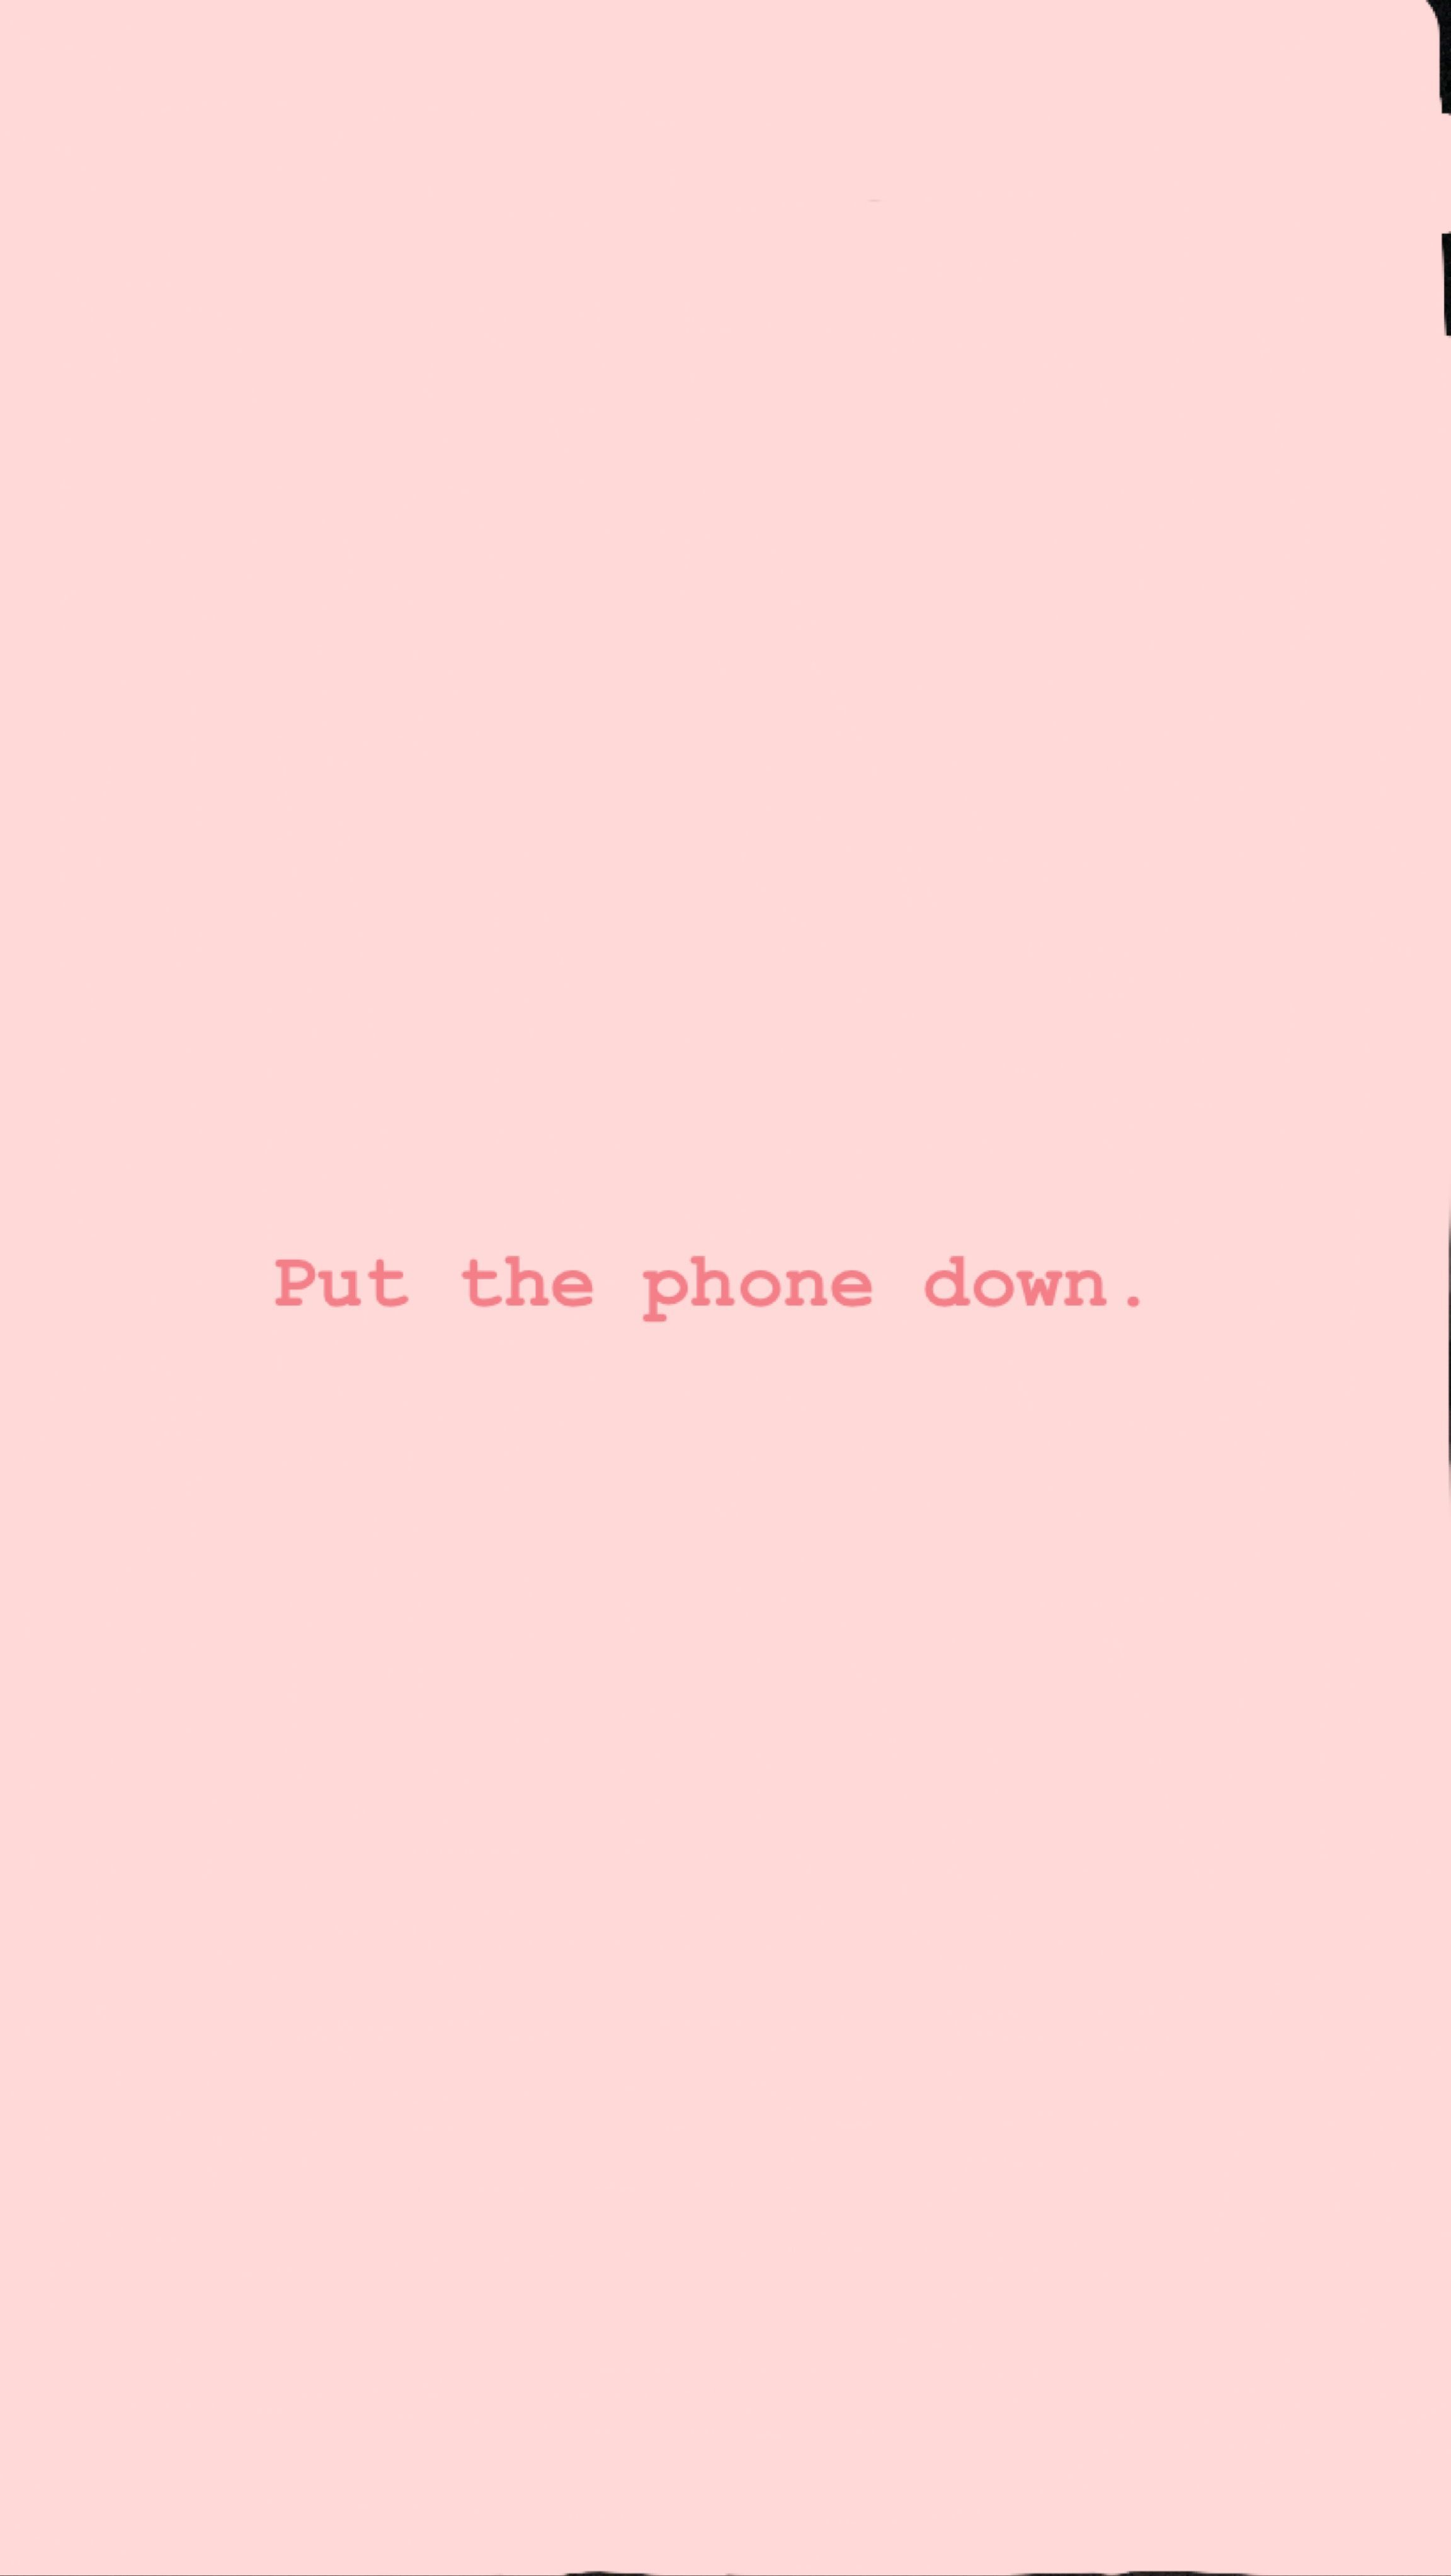 Odłóż telefon. iPhone wallpaper quotes funny, Wallpaper quotes, Tumblr iphone wallpaper